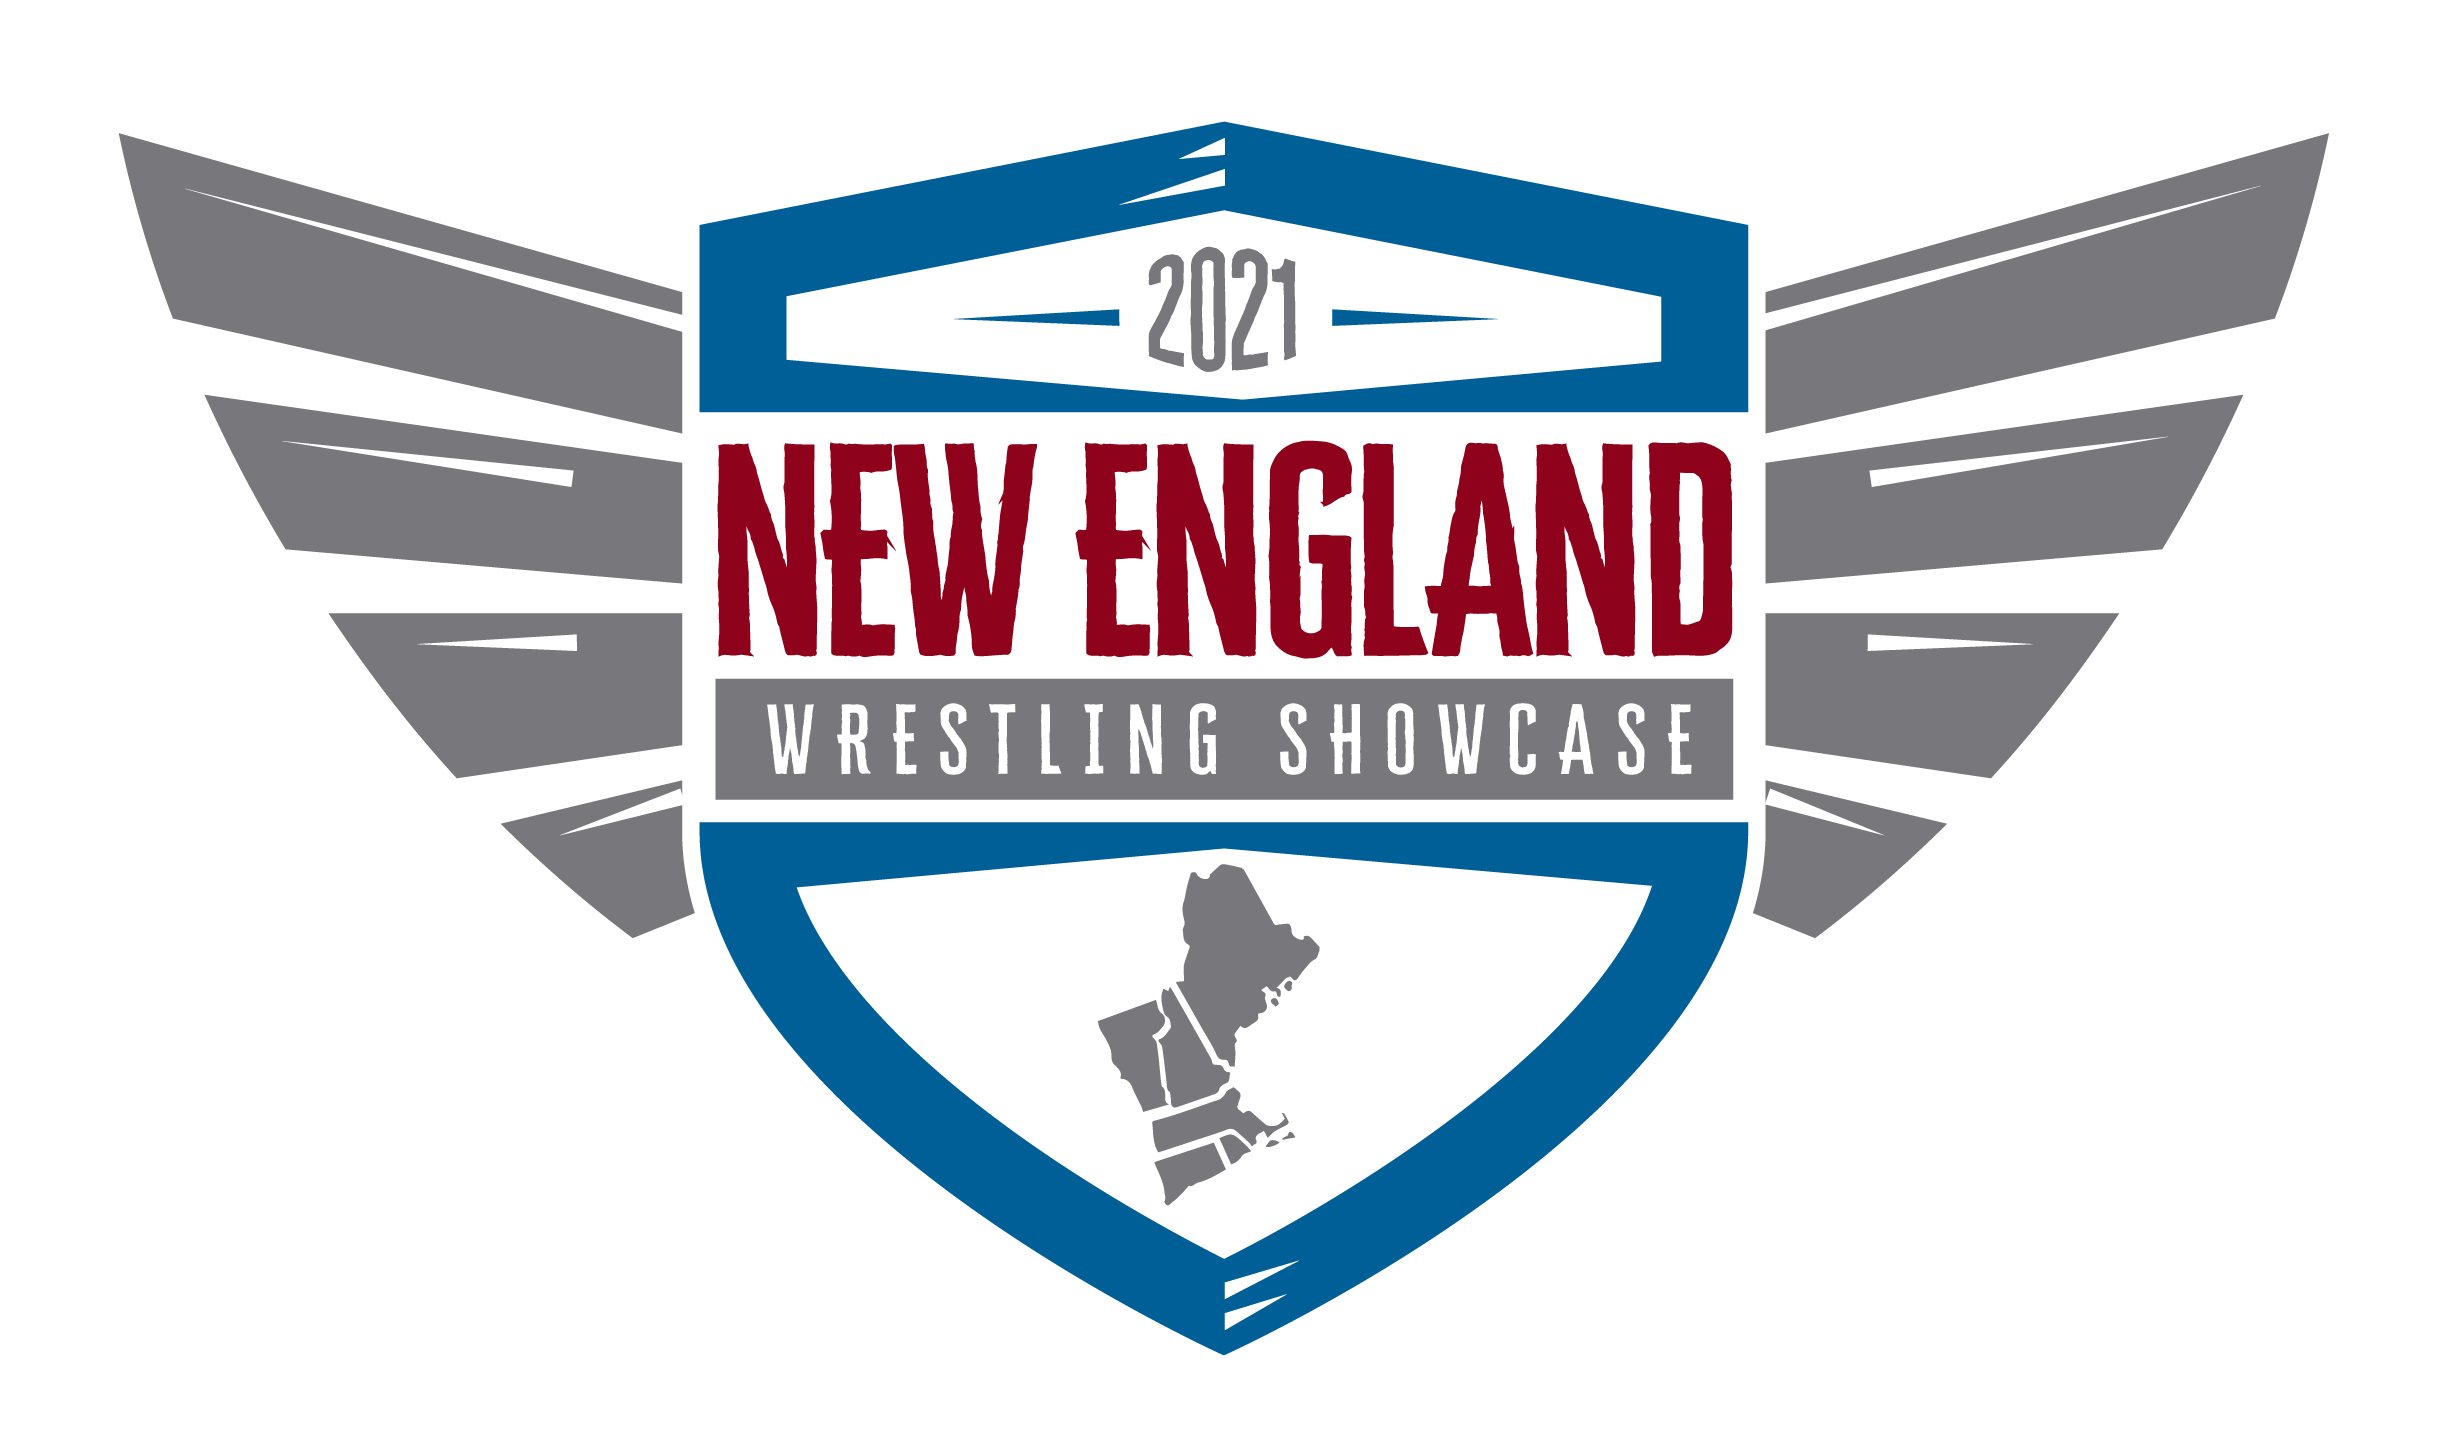 New England Wrestling Show Case